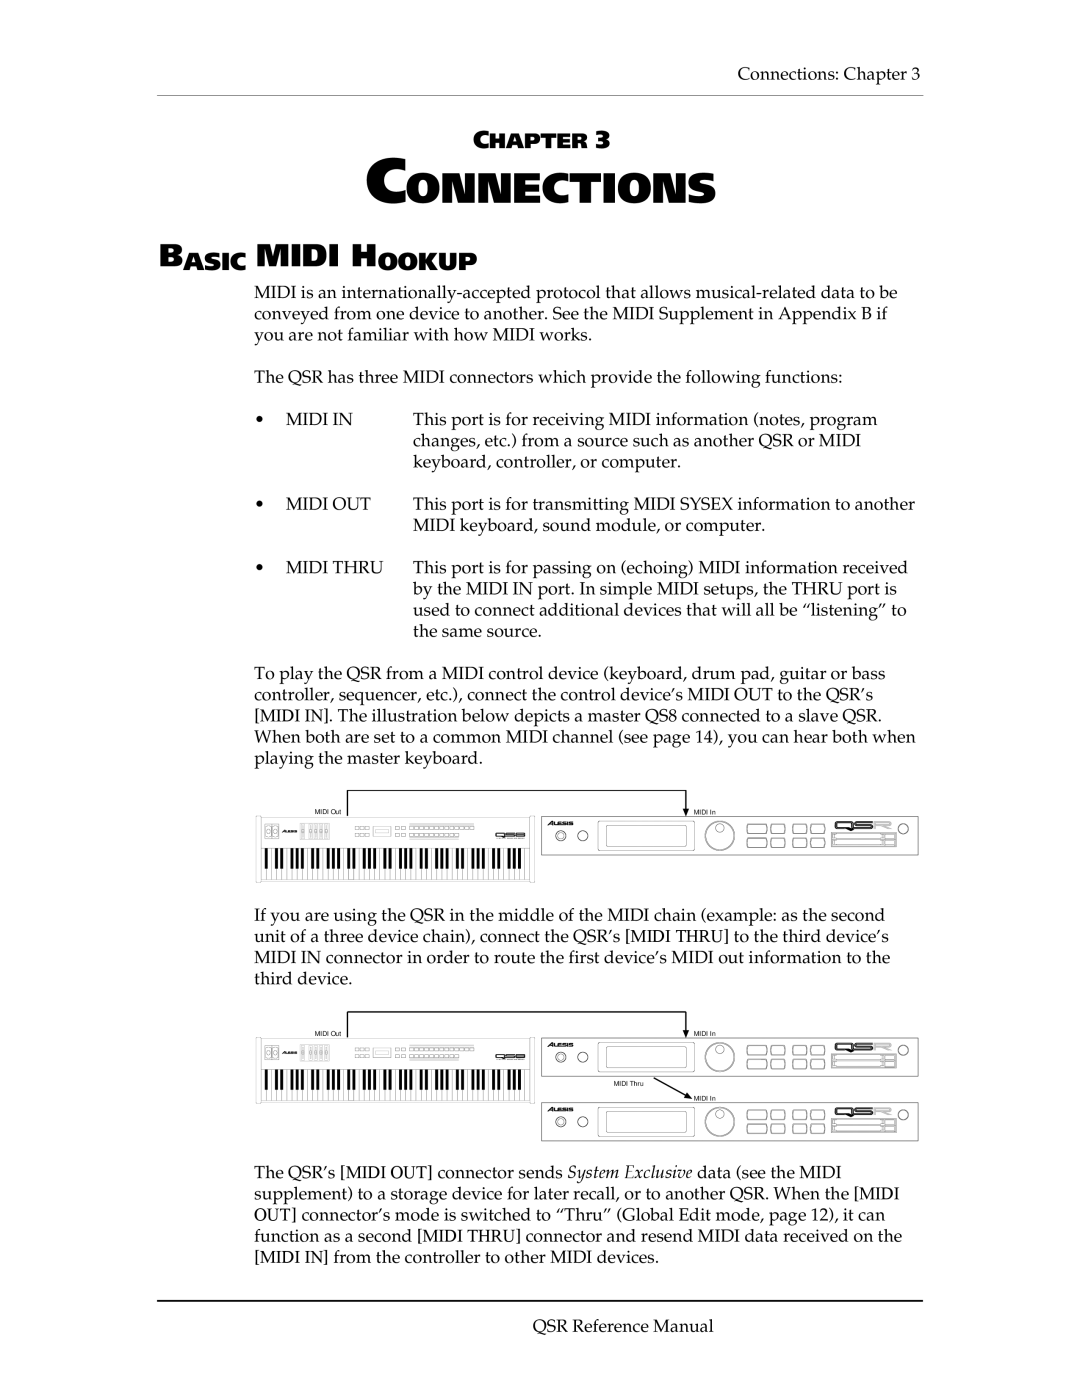 Alesis QSR 64 manual Connections, Basic Midi Hookup 